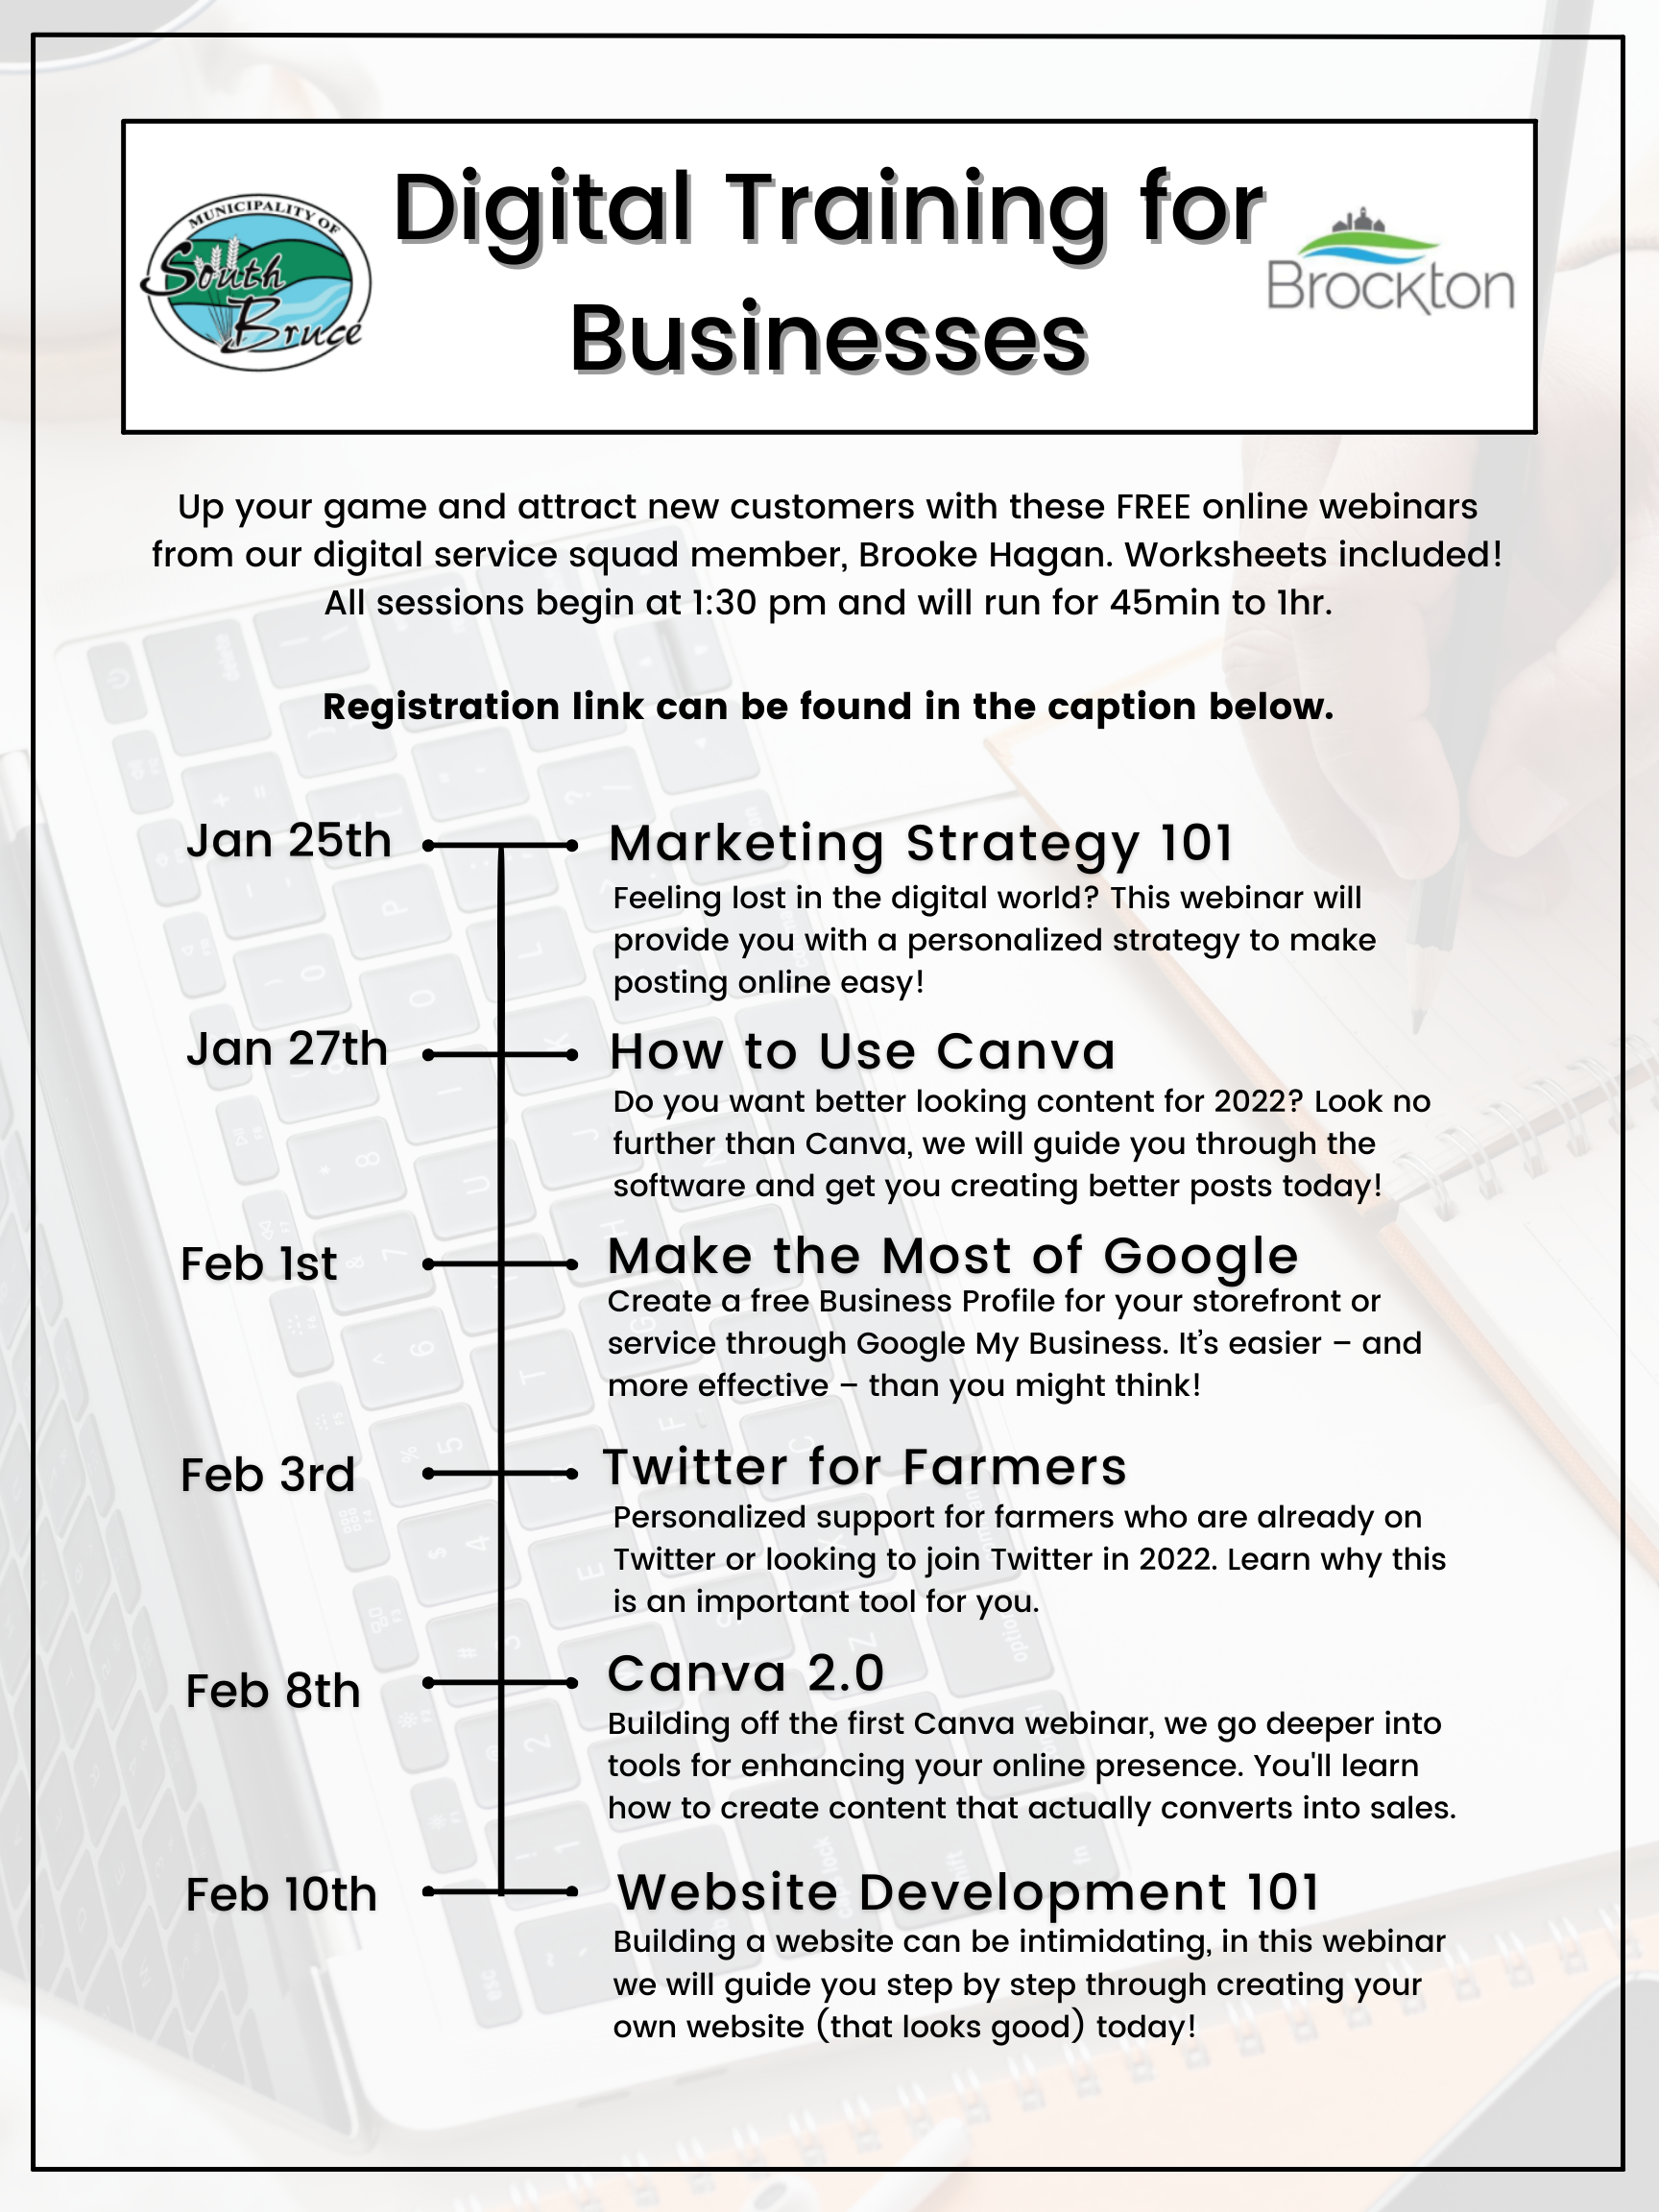 schedule for the digital marketing webinars